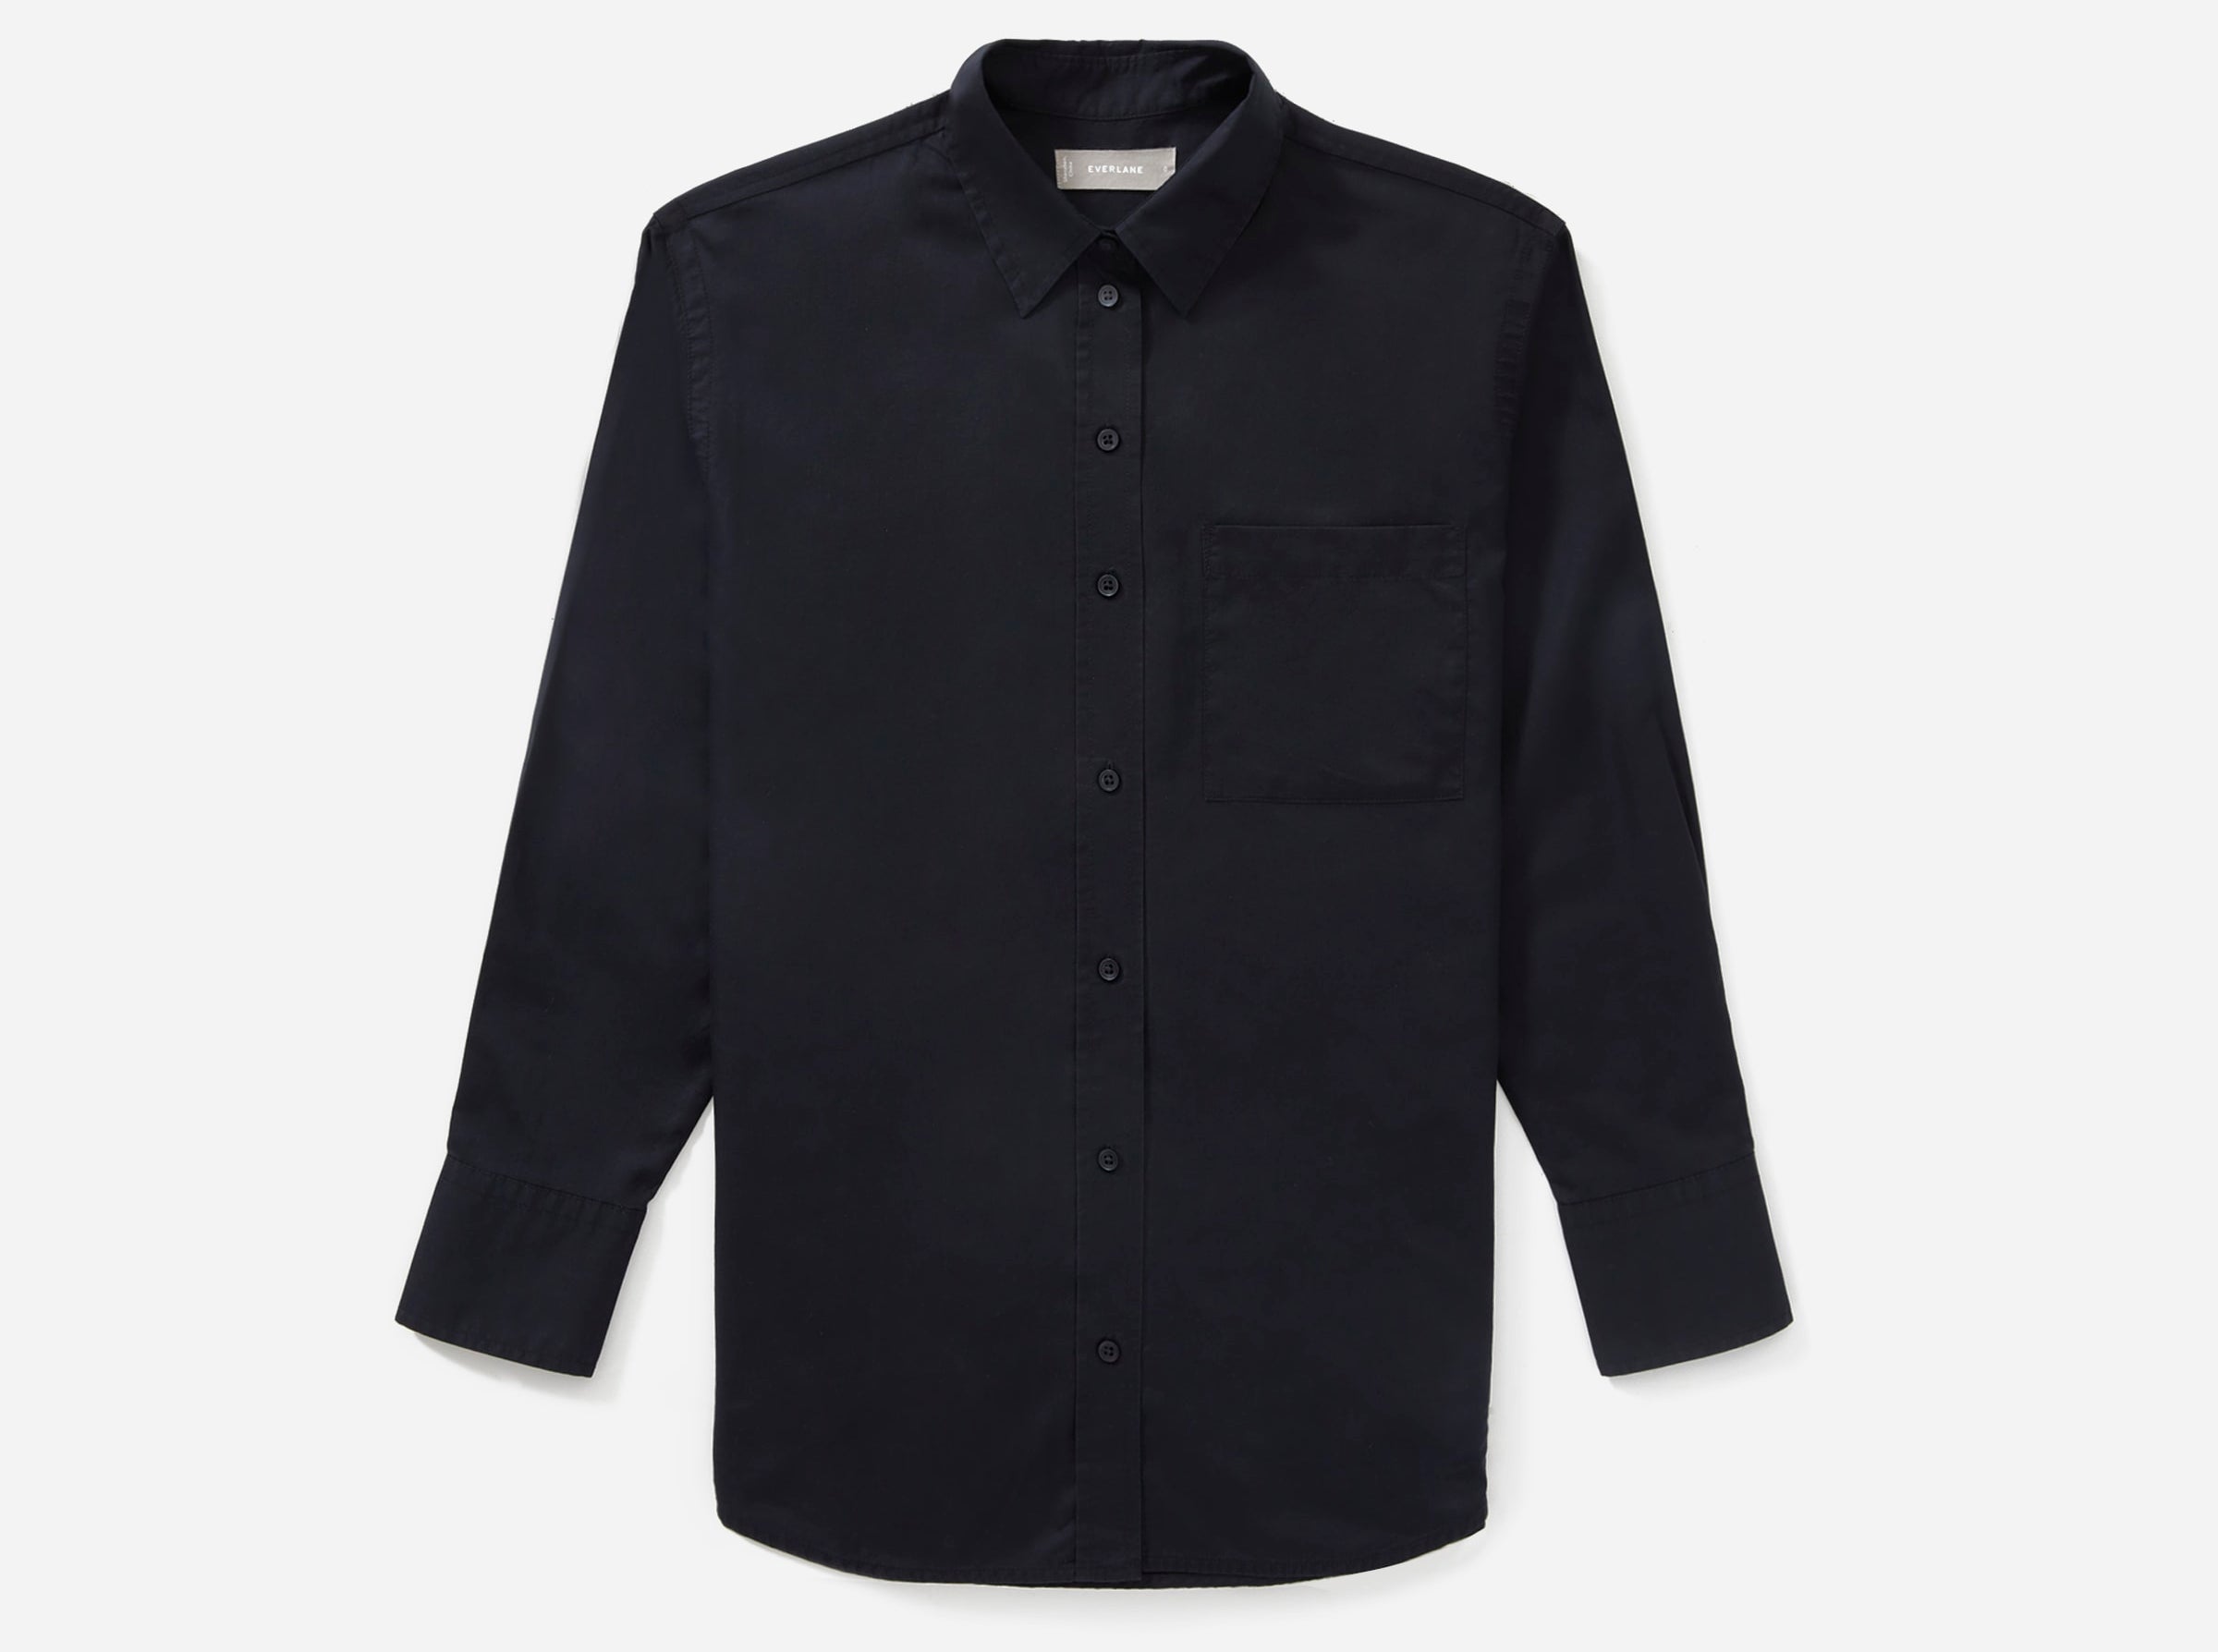 Everlane - Silky cotton oversized classic black button-up shirt